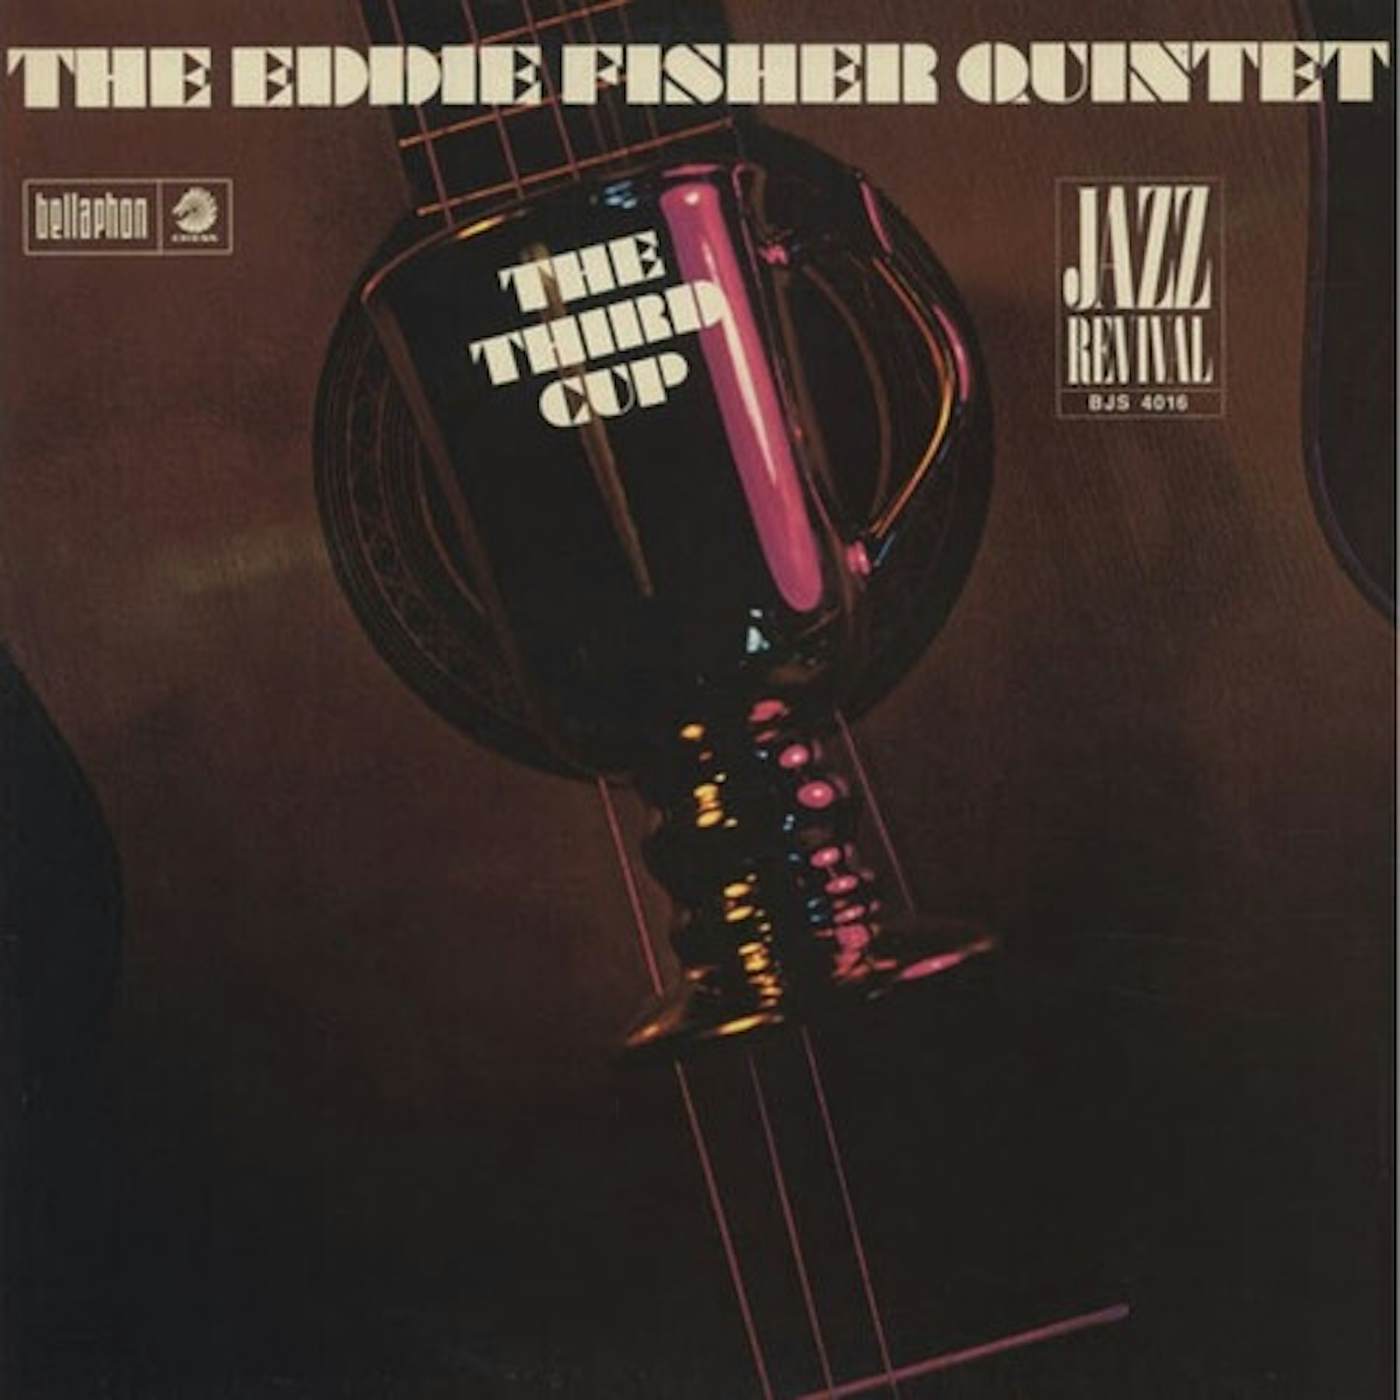 Eddie Fisher THIRD CUP (VERVE BY REQUEST SERIES) Vinyl Record